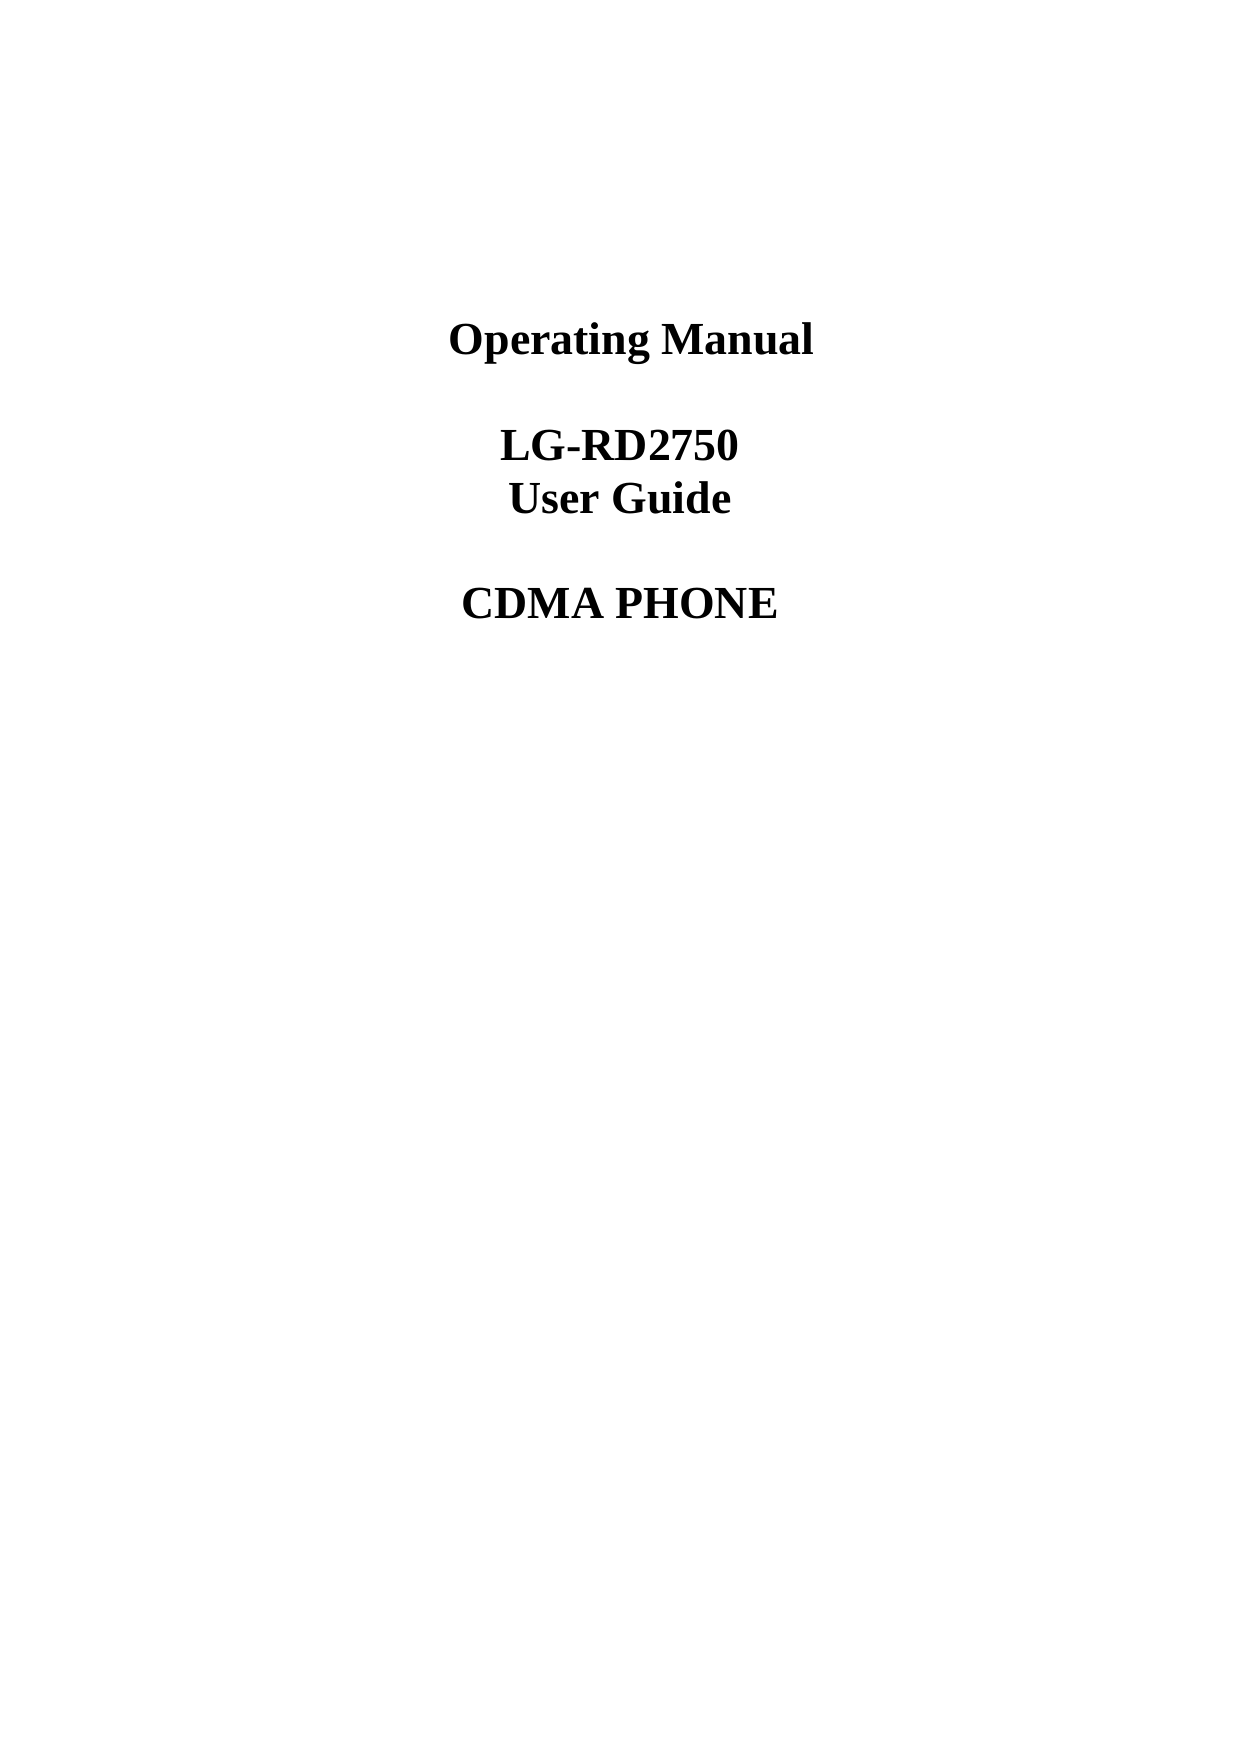    Operating Manual  LG-RD2750 User Guide  CDMA PHONE                          